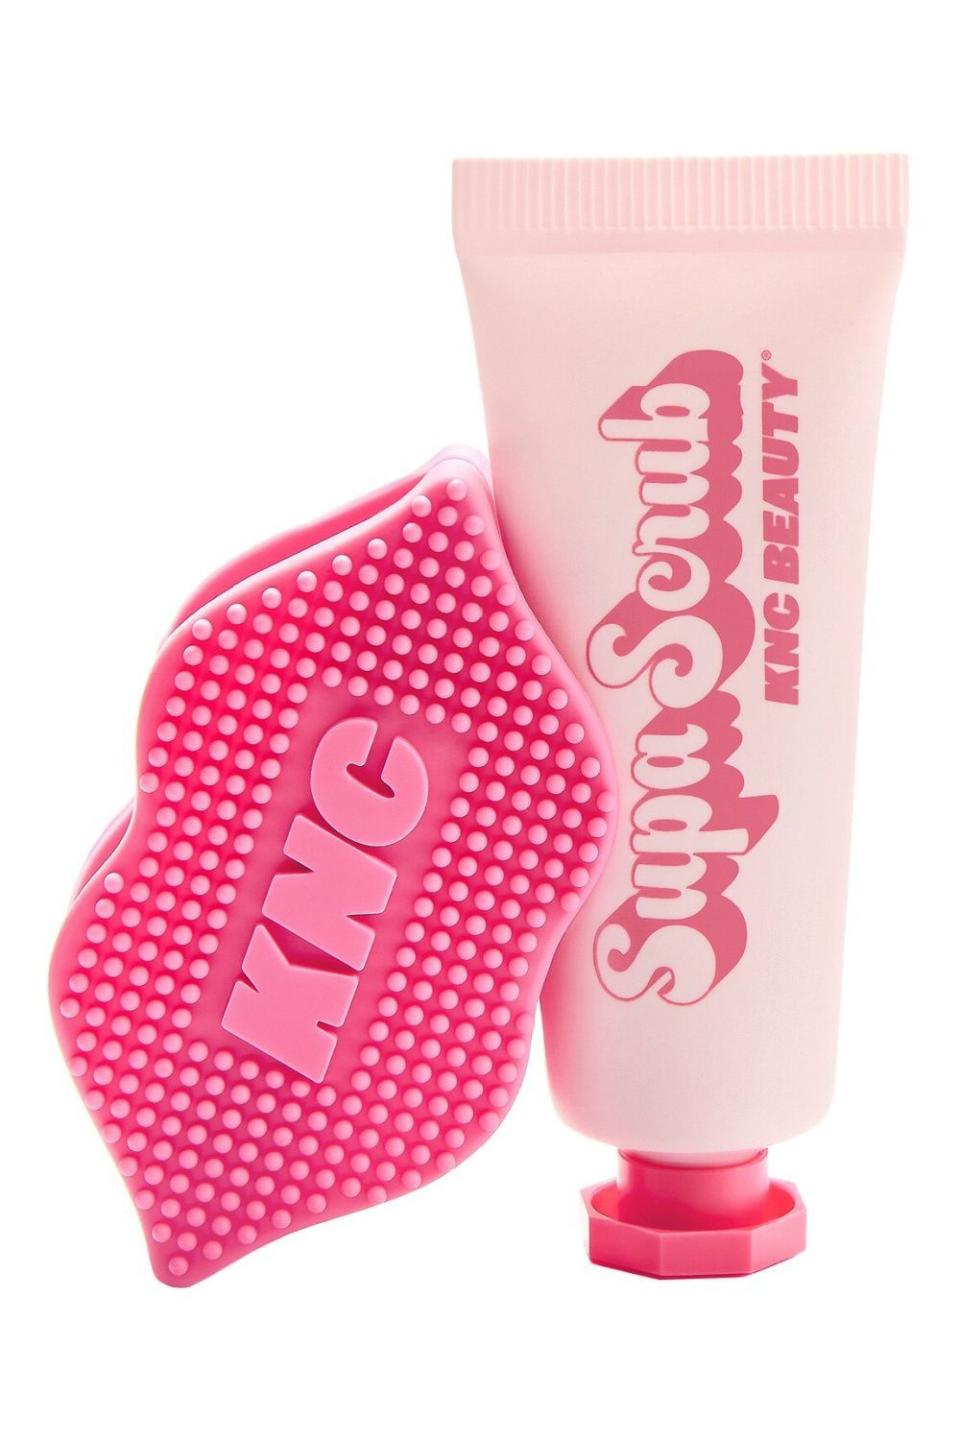 16) KNC Beauty Lip Scrub